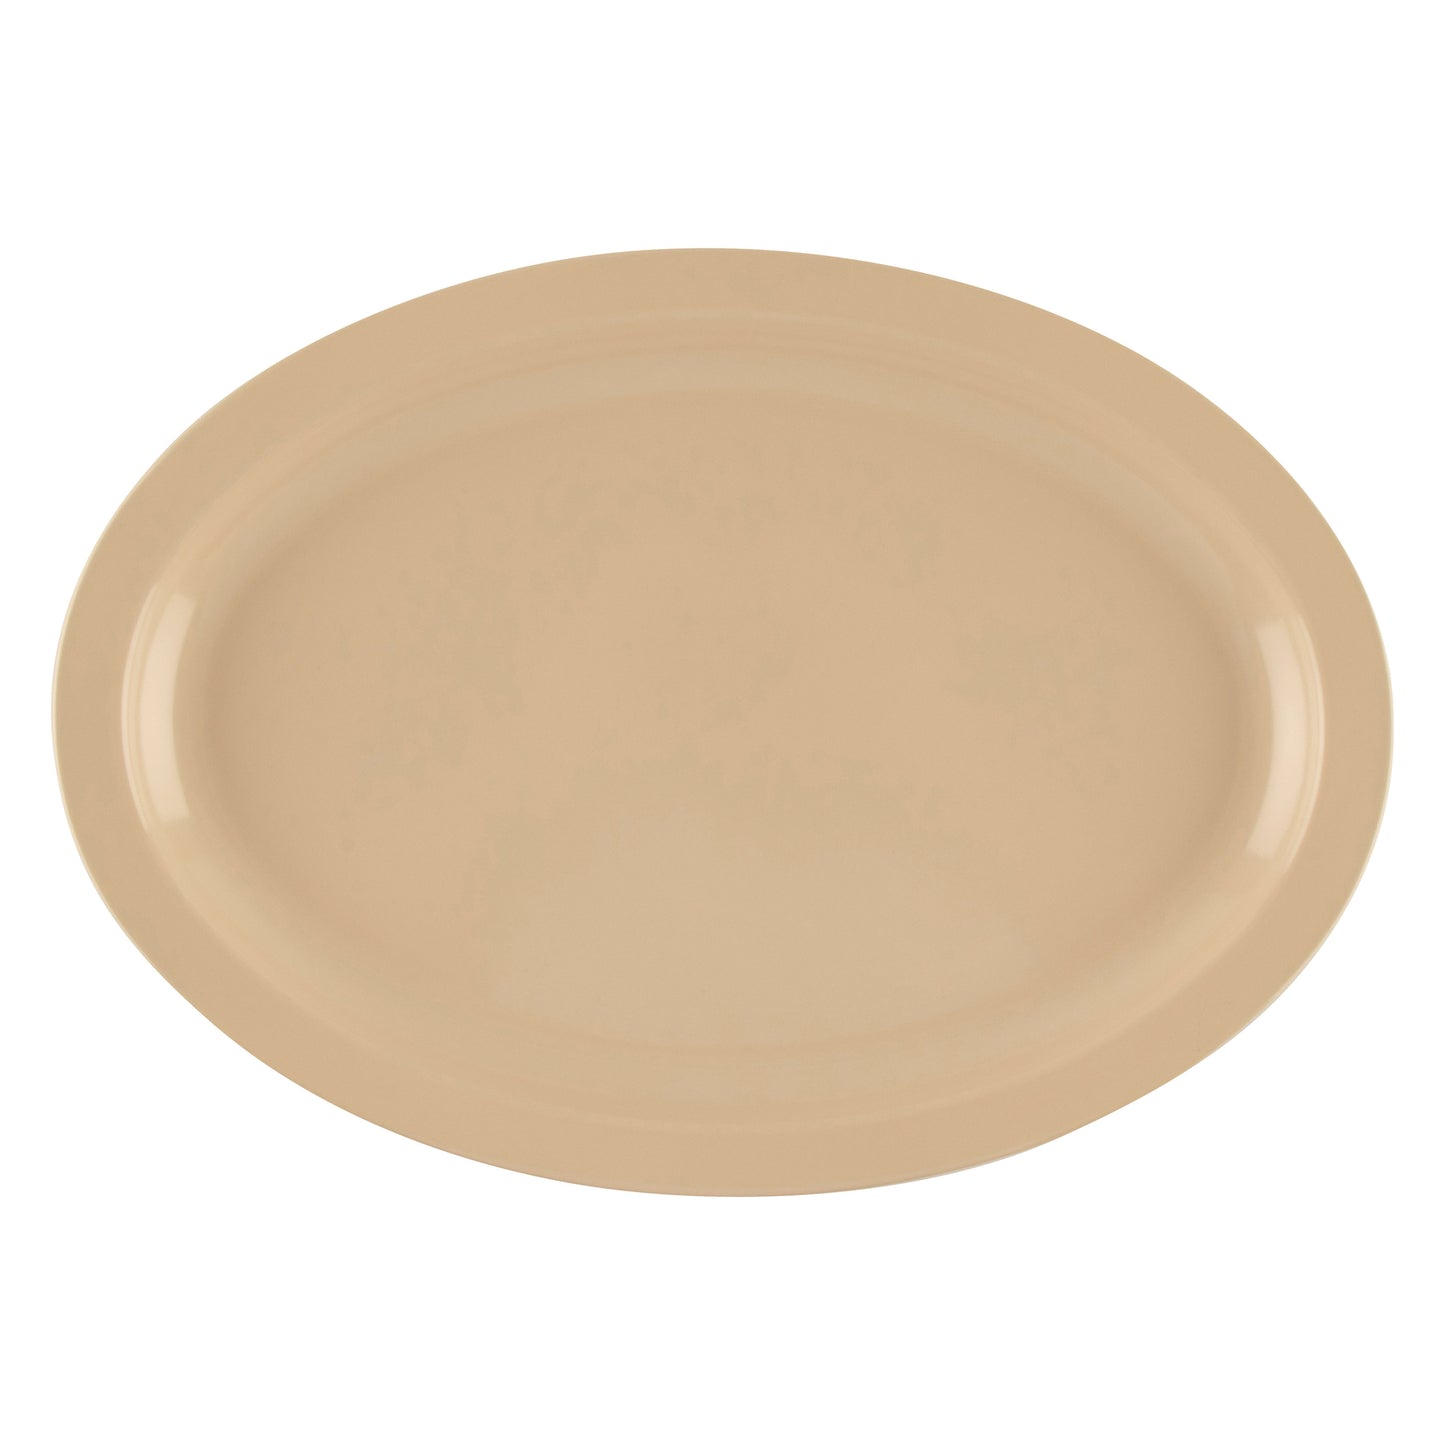 15.75" x 11" Oval Platter (12 Pack)